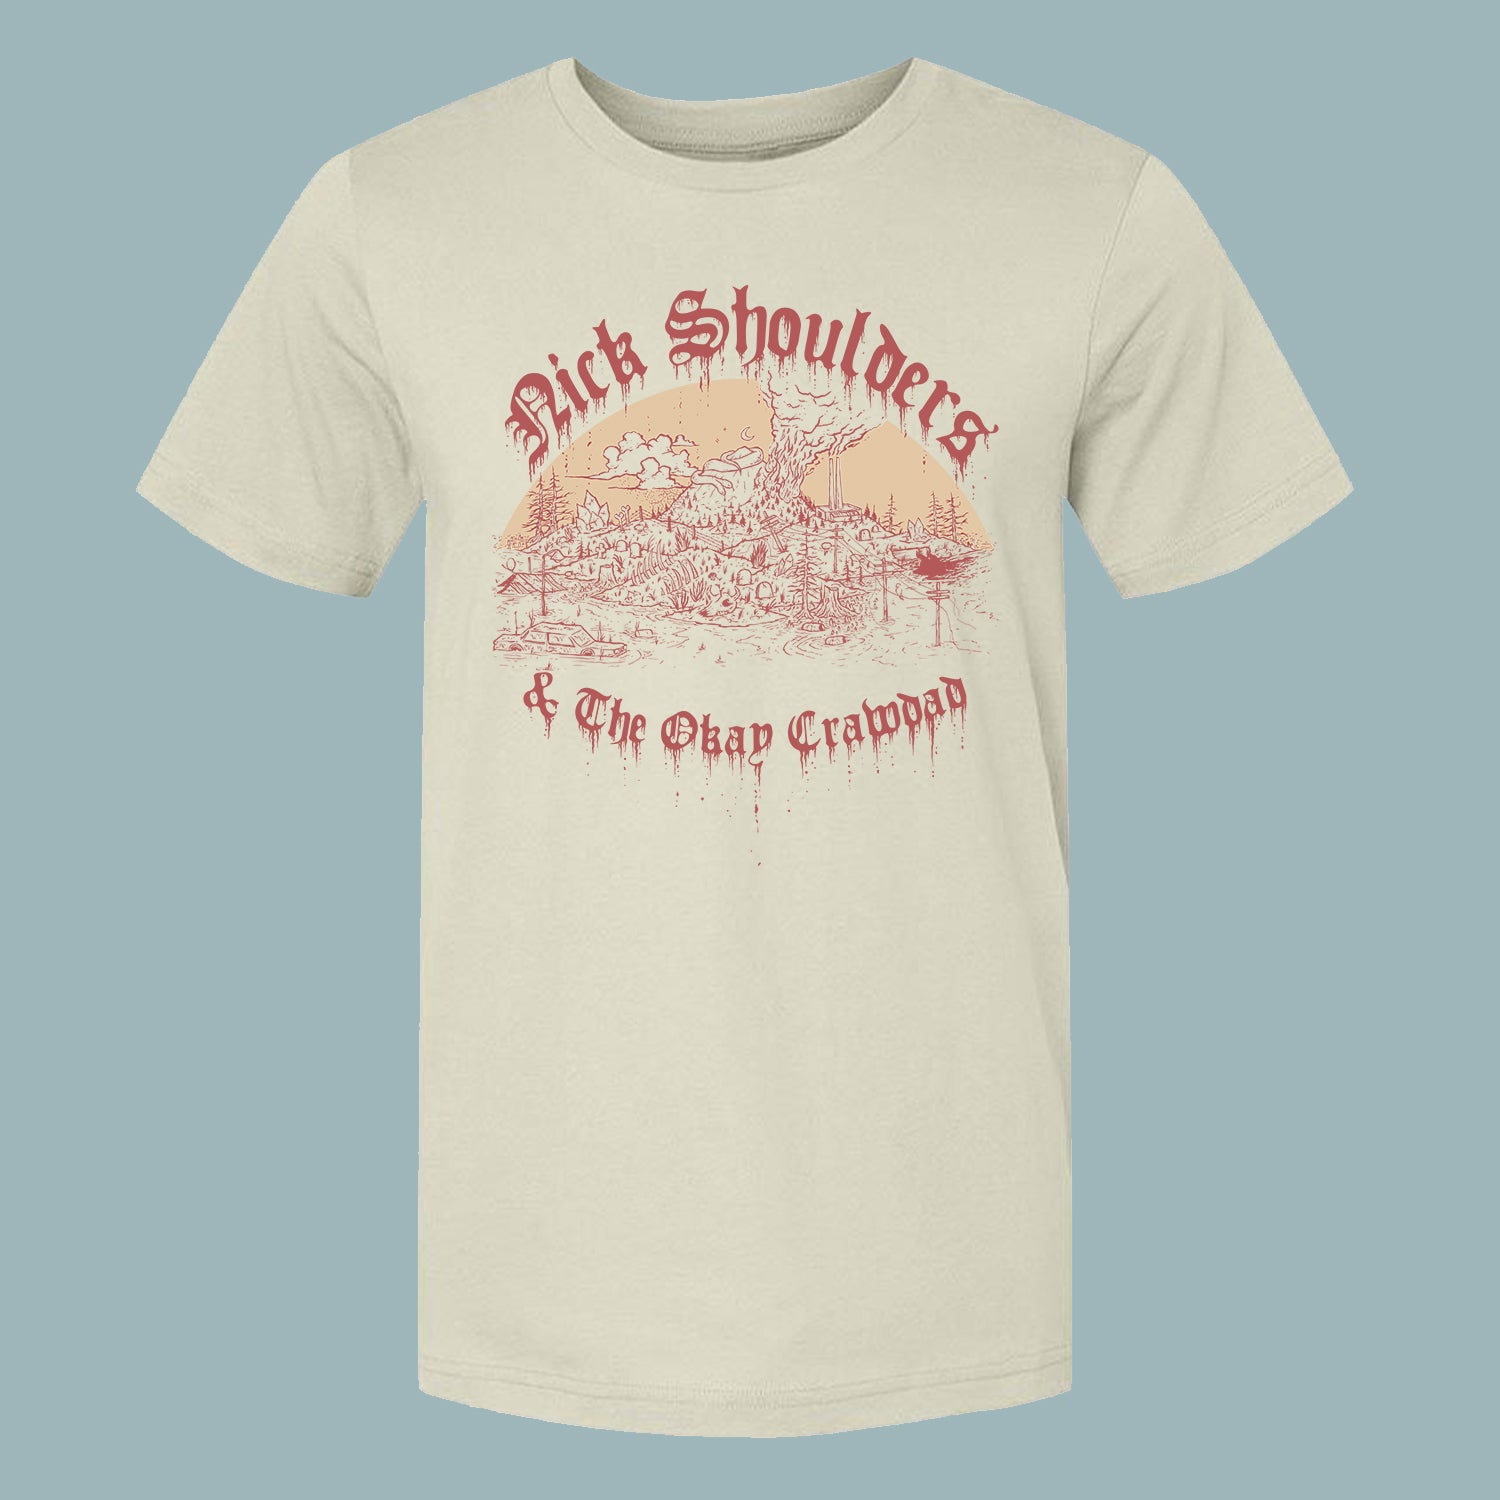 Nick Shoulders - “All Bad” Shirt